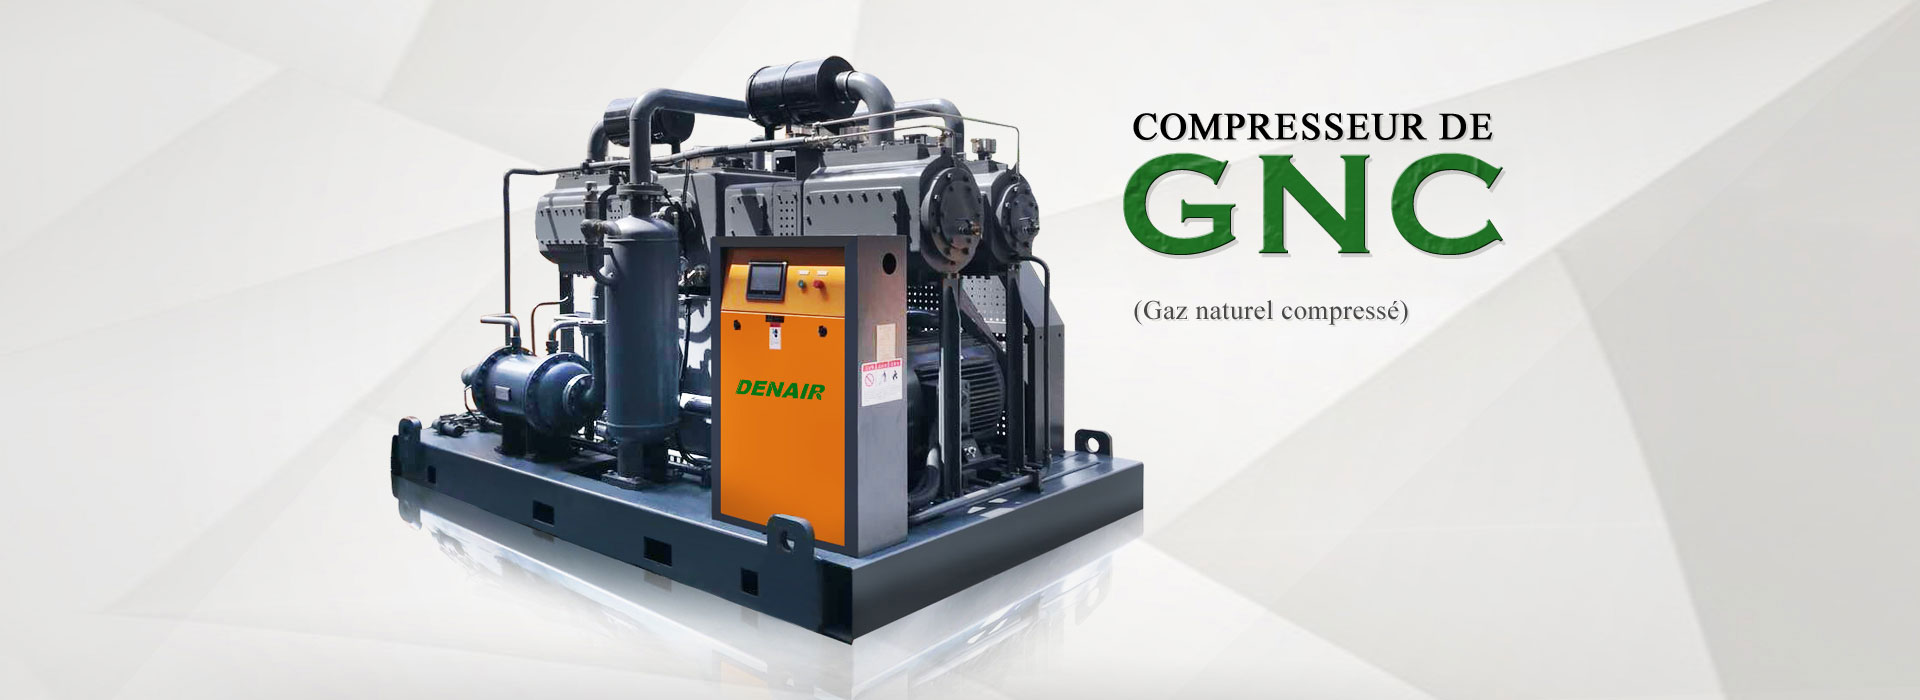 Compresseur de GNC (Gaz naturel compressé)